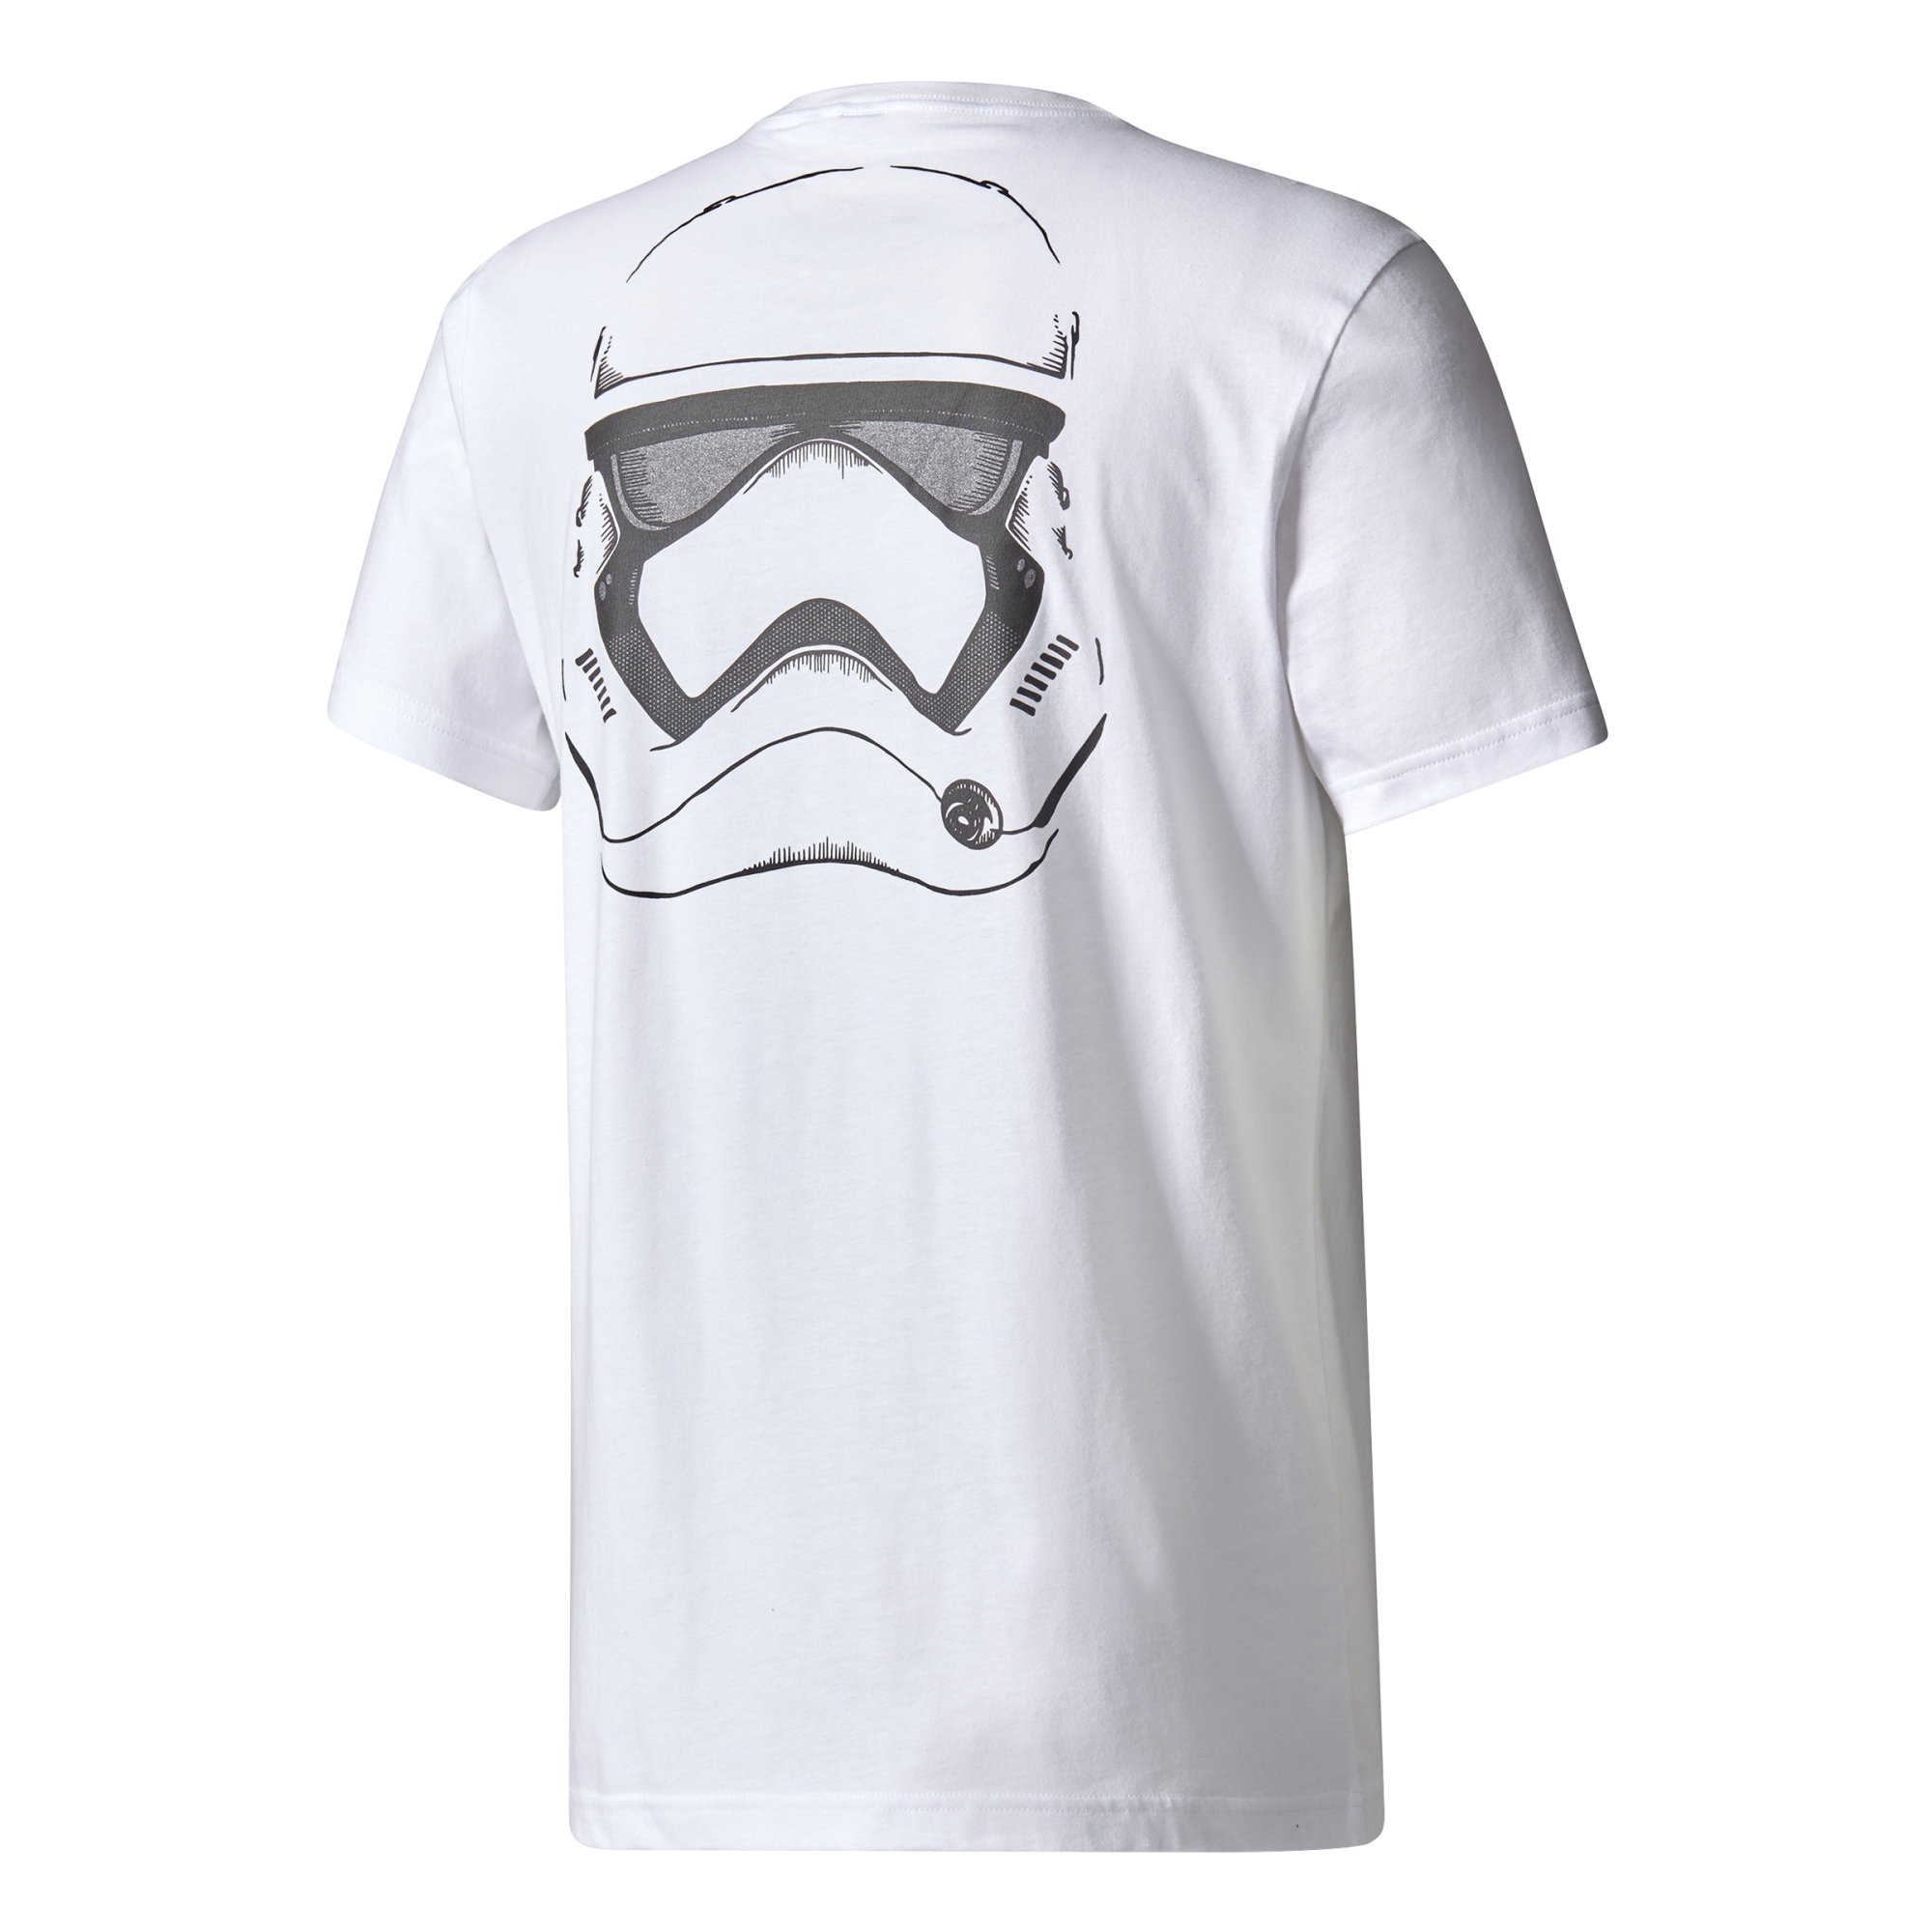 Cuadrante Atticus llave inglesa Adidas Star Wars Stormtrooper Tee (white/black)